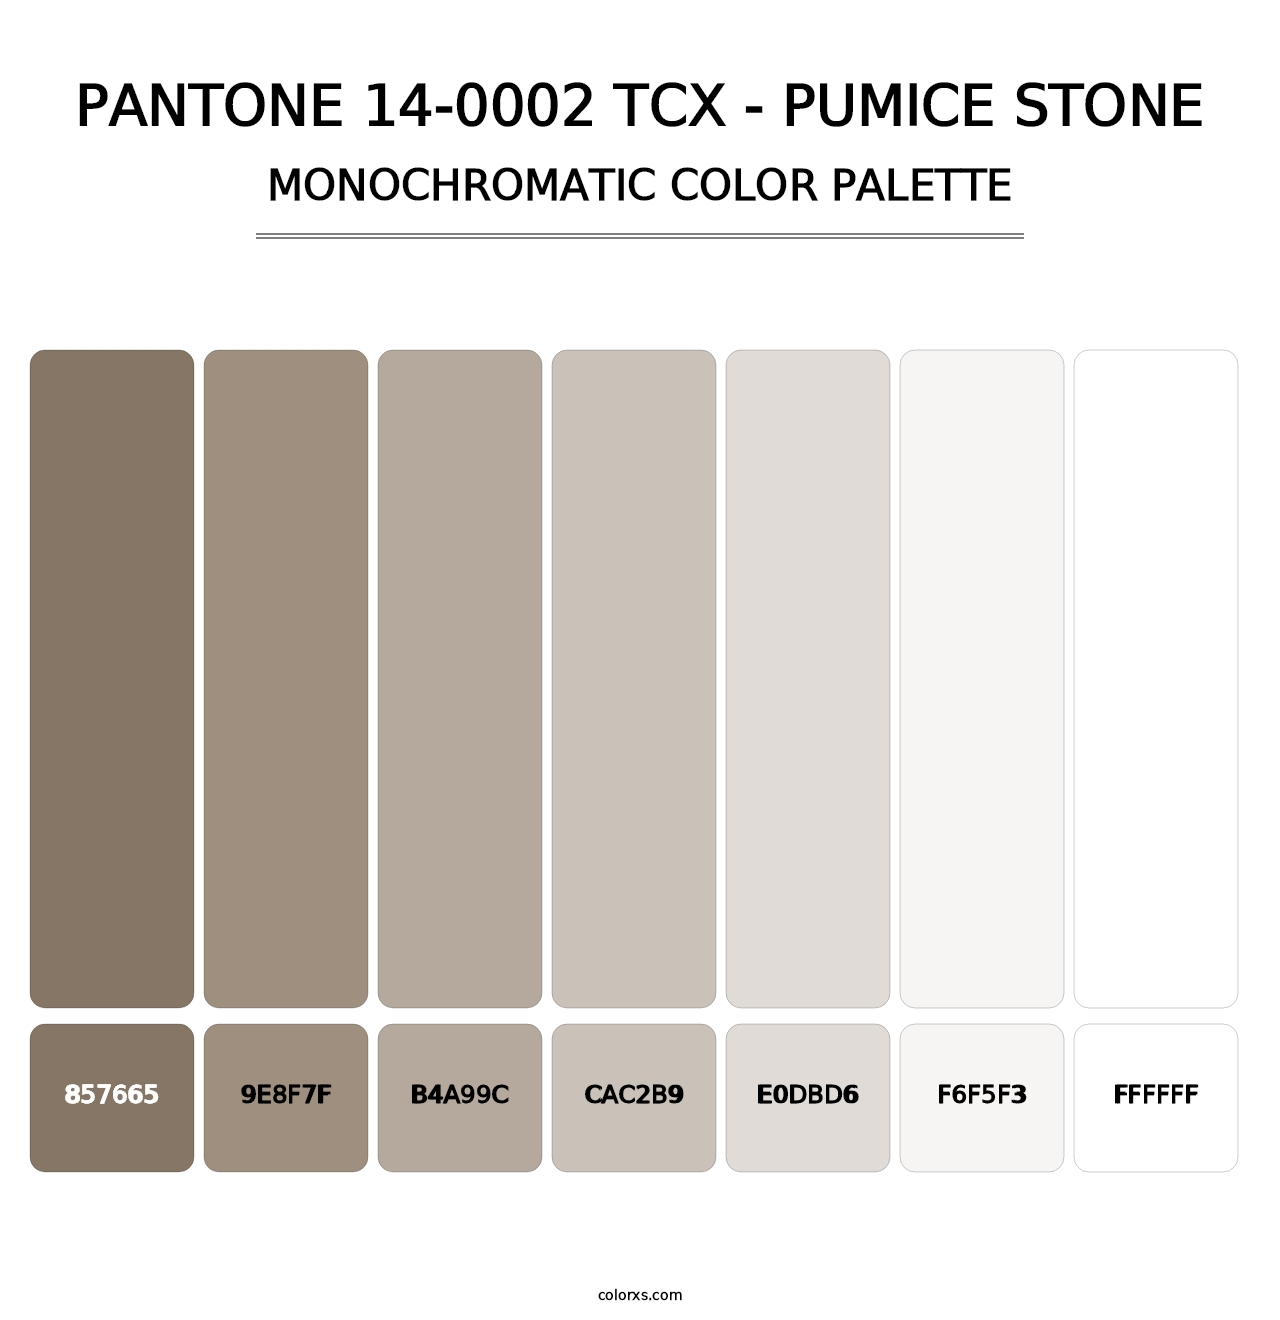 PANTONE 14-0002 TCX - Pumice Stone - Monochromatic Color Palette